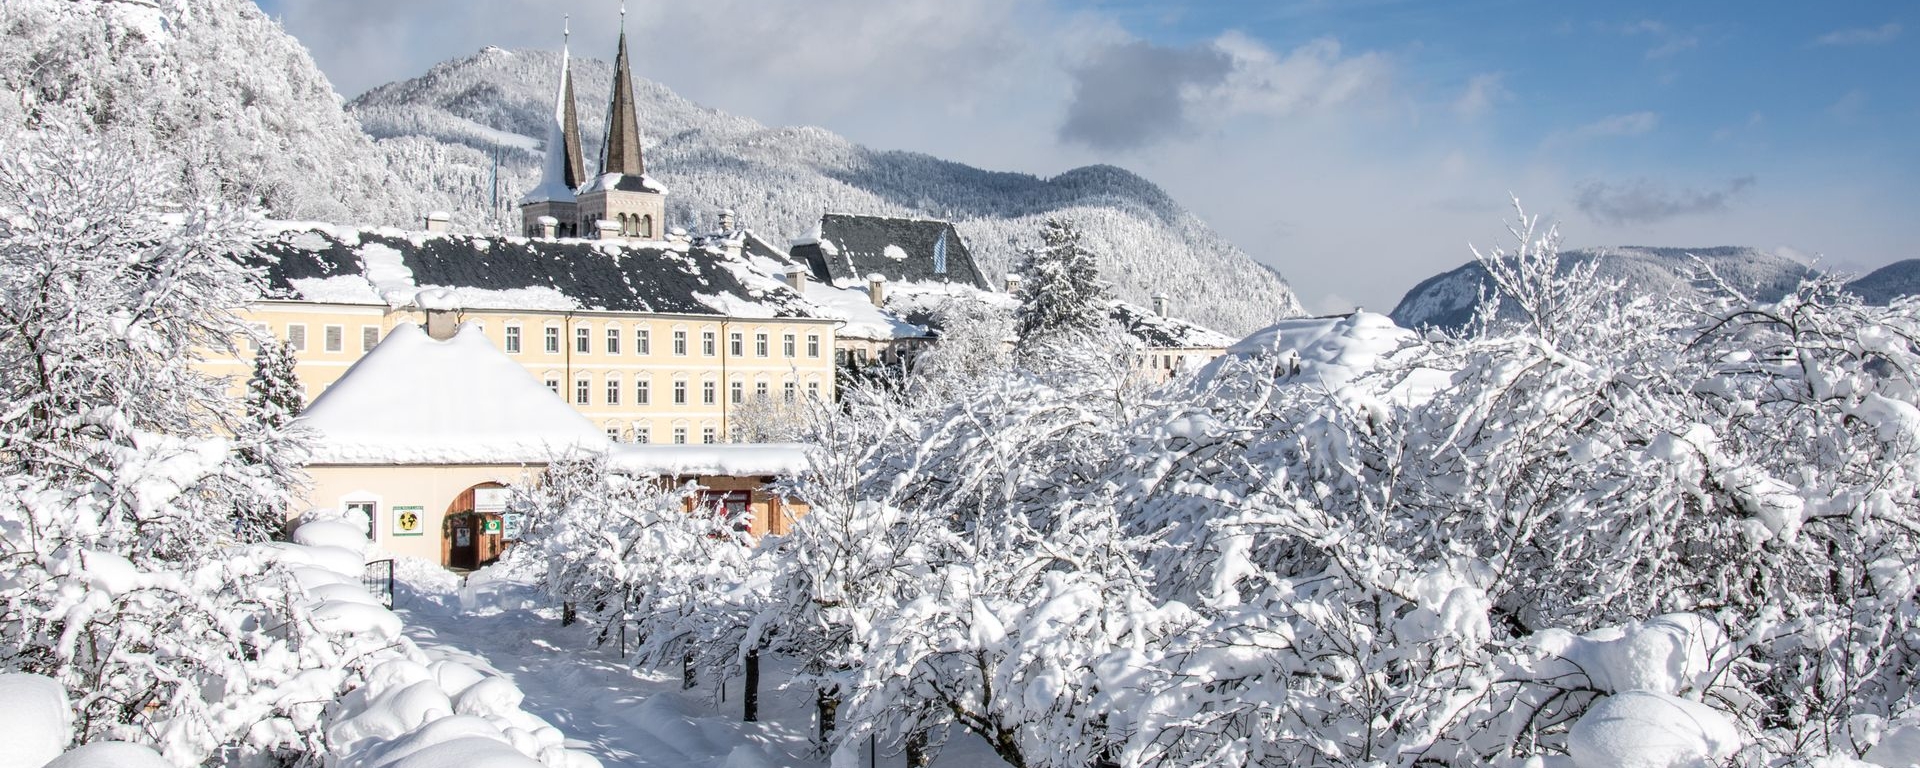 Berchtesgaden - Snowtours7